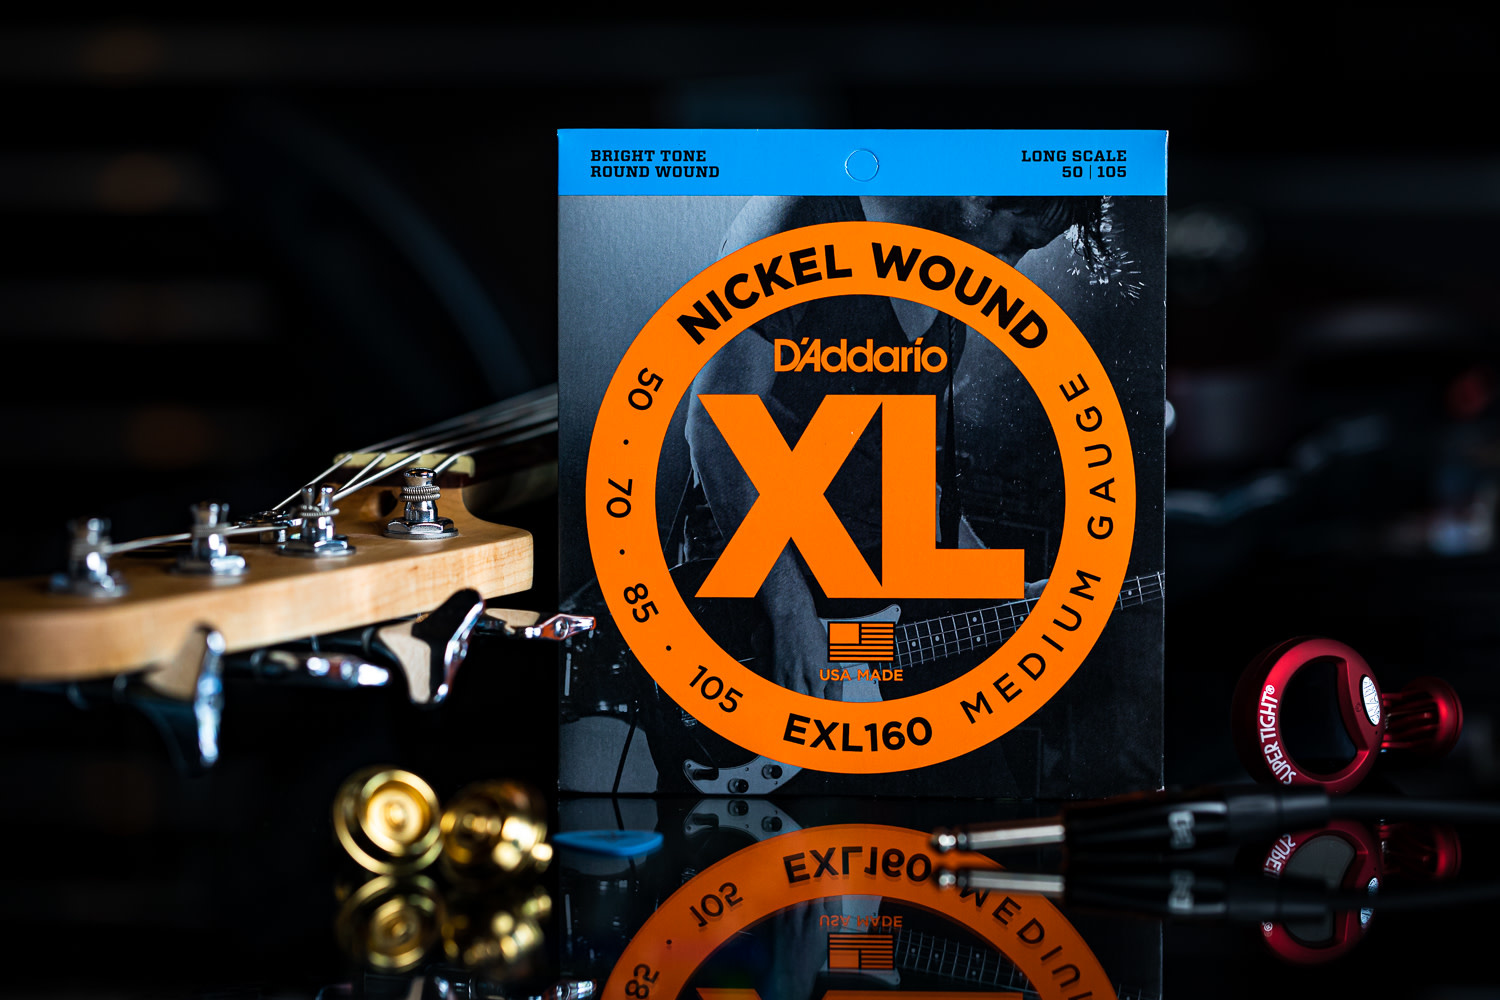 D'Addario D'Addario XL 50-105 Bass Strings, Nickel Wound, Medium